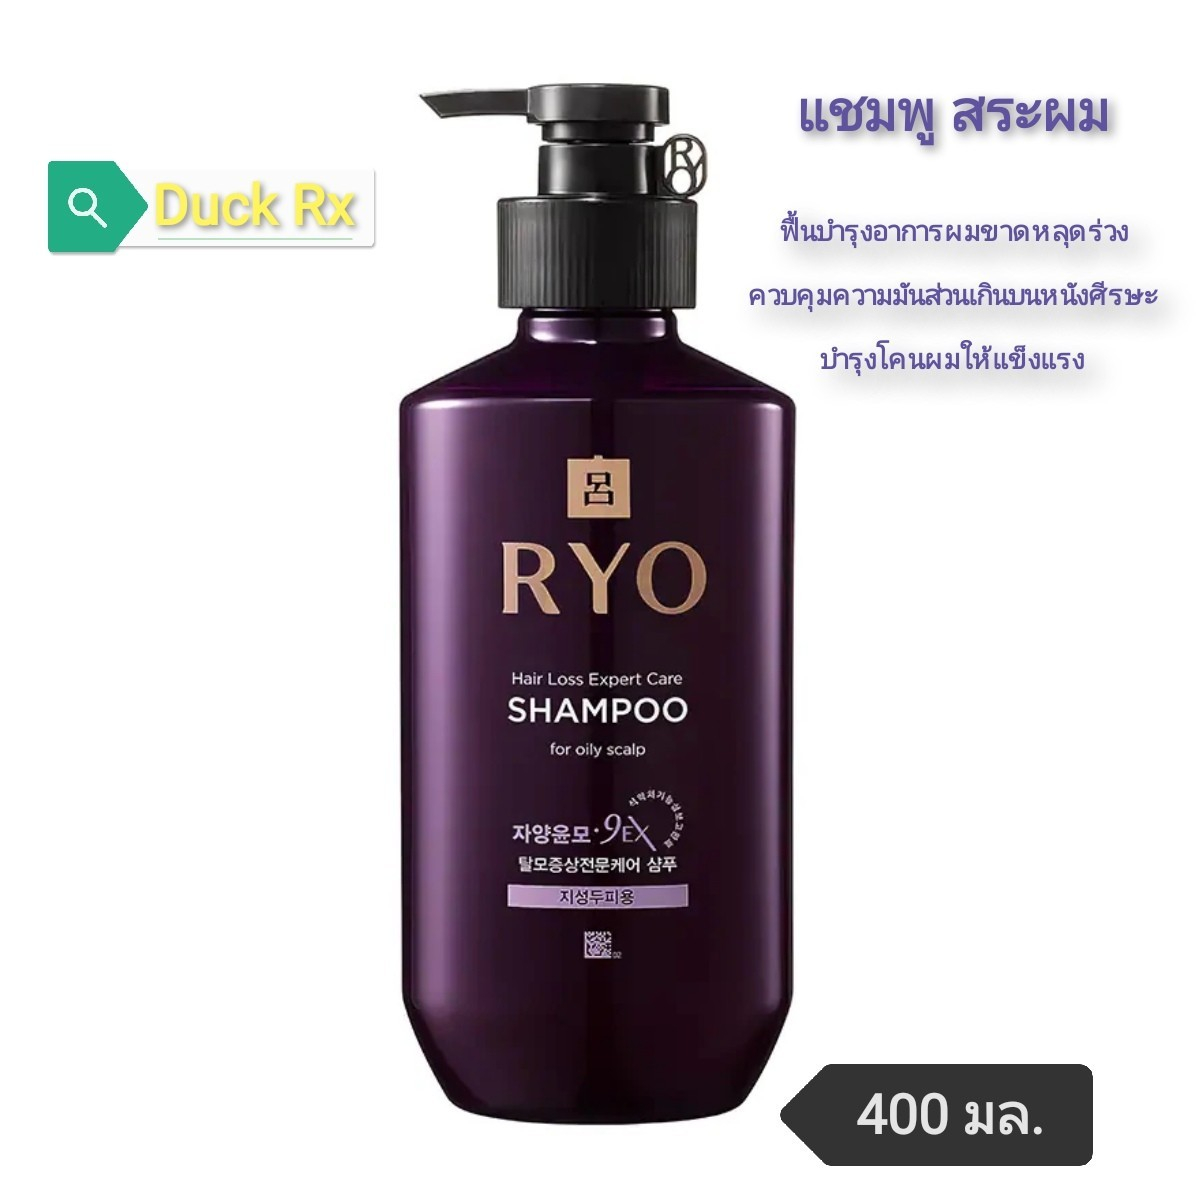 RYO HAIR LOSS EXPERT CARE SHAMPOO FOR OILY SCALP 400 ml. แชมพู เรียว​ แฮร์ ลอส เอ็กซ์เพิร์ท แคร์ ออยลี่ สคาล์พ​ 400 มล.